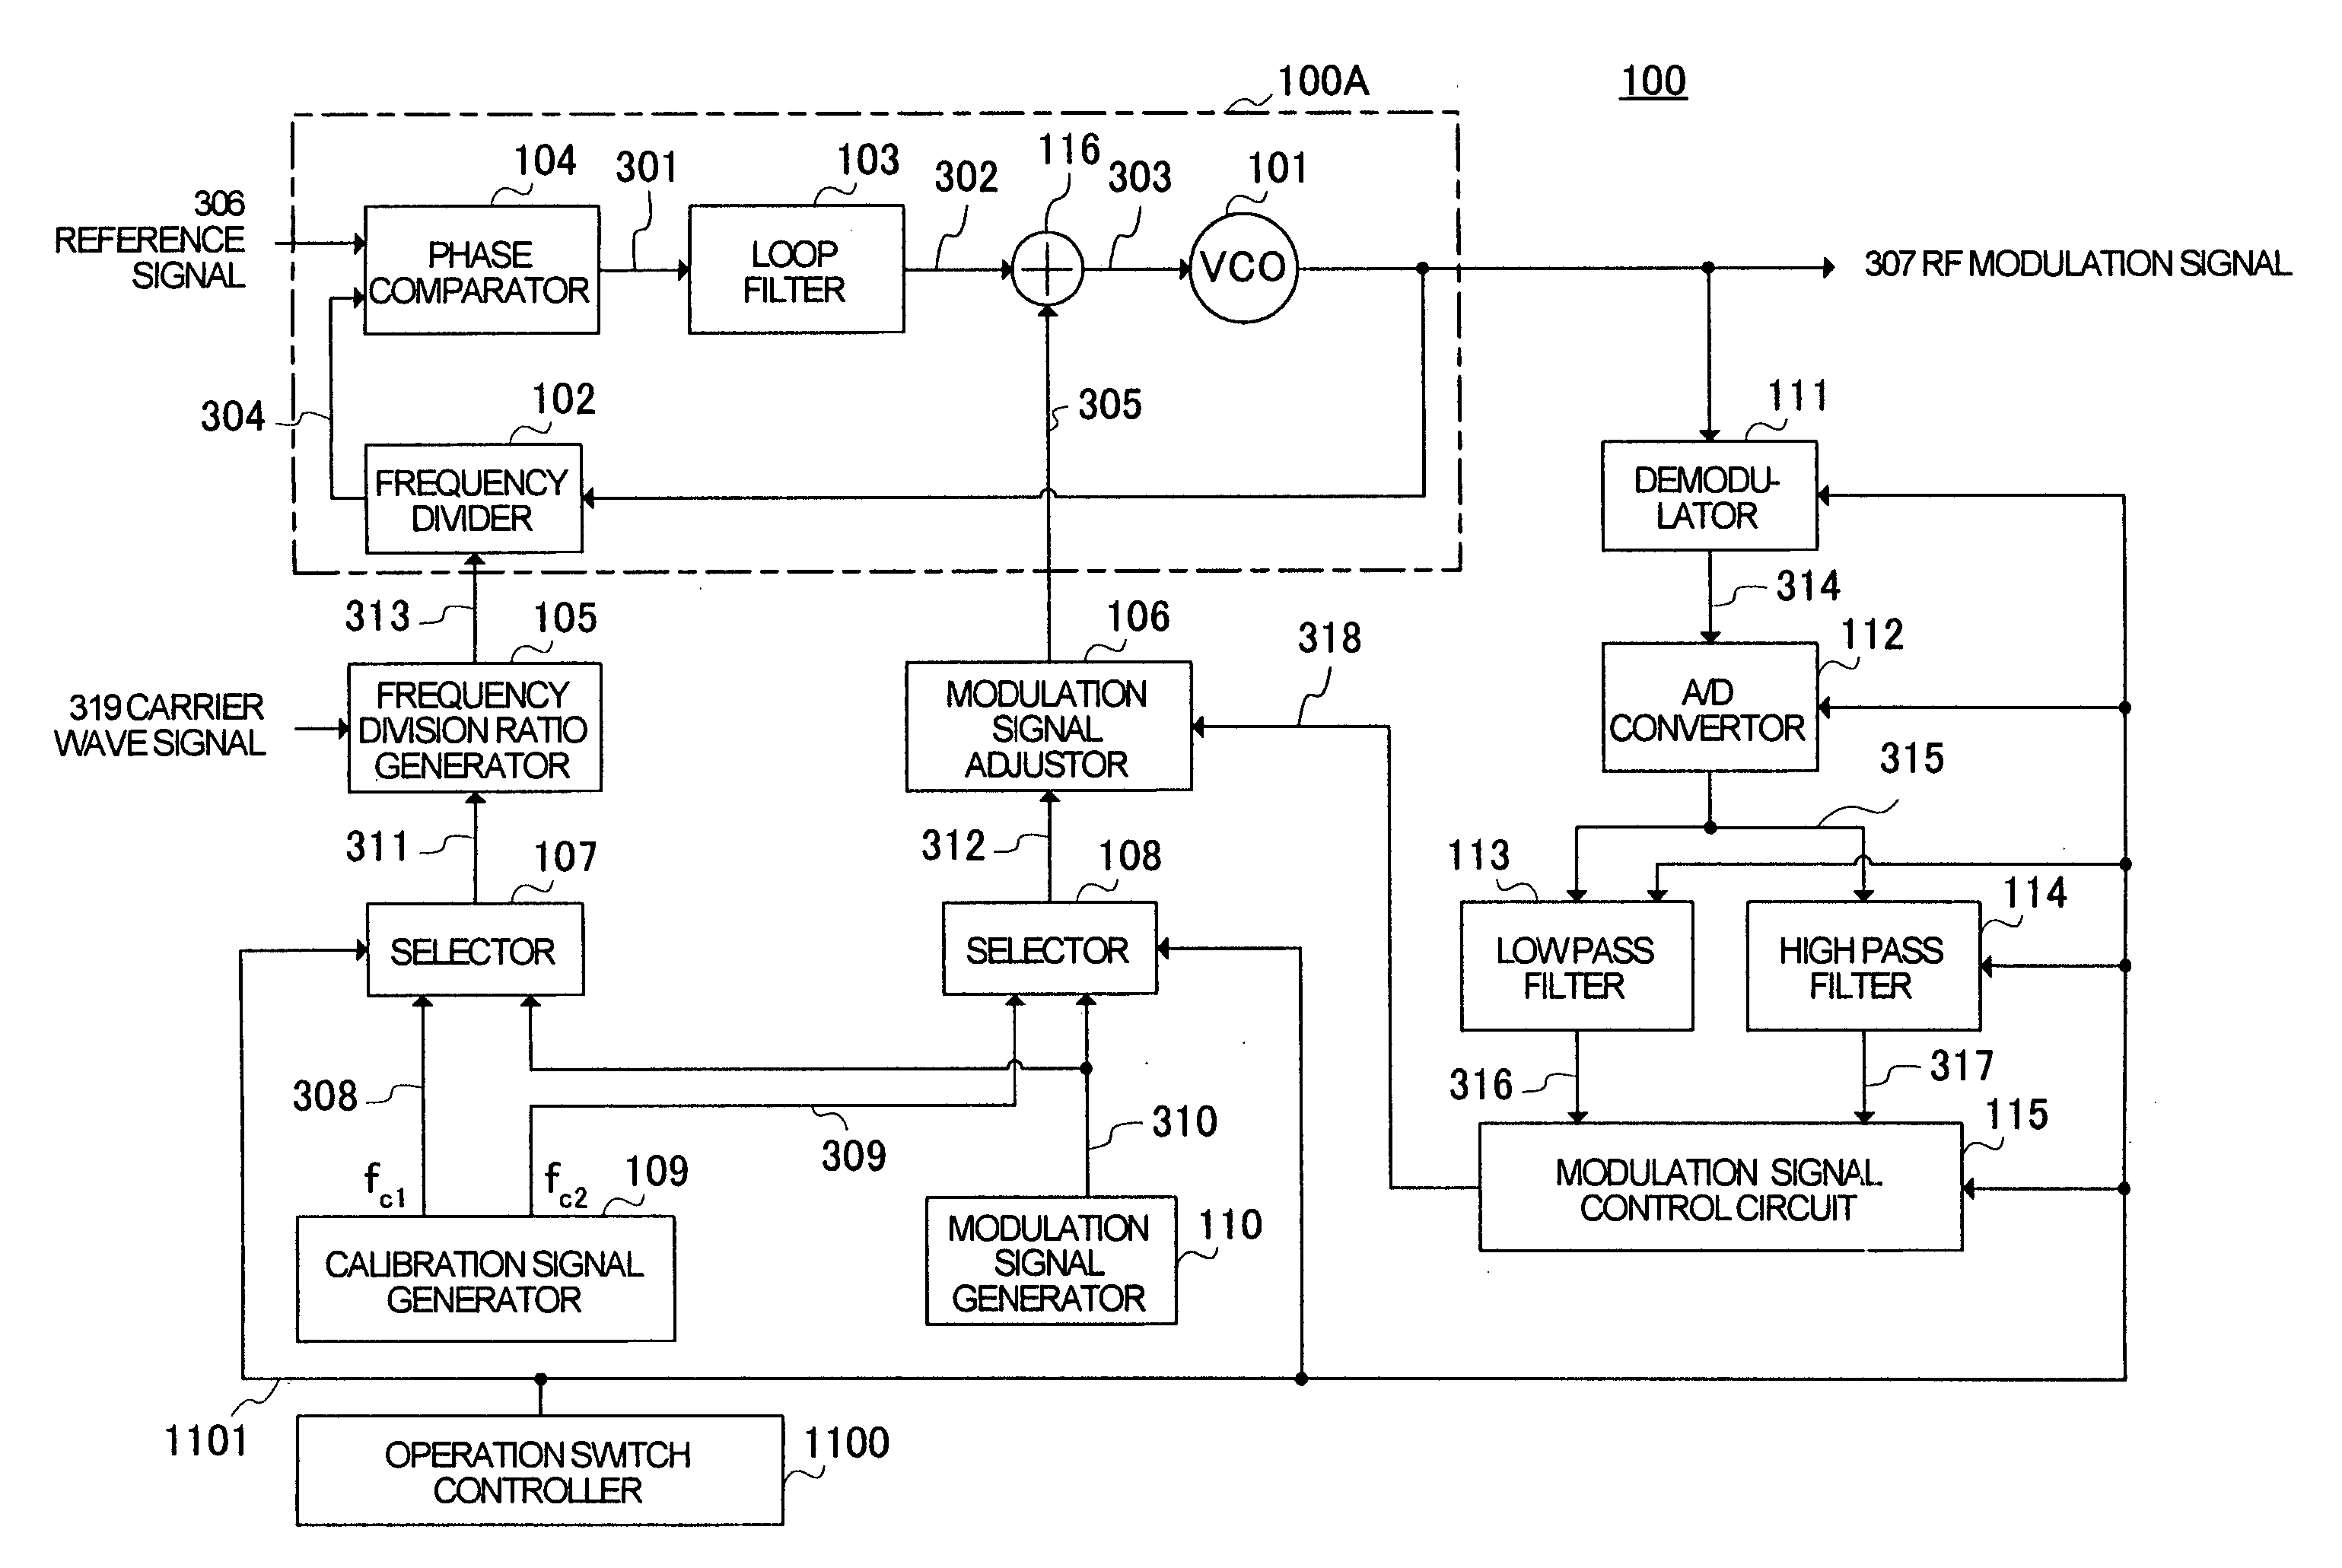 PLL modulation circuit and polar modulation apparatus